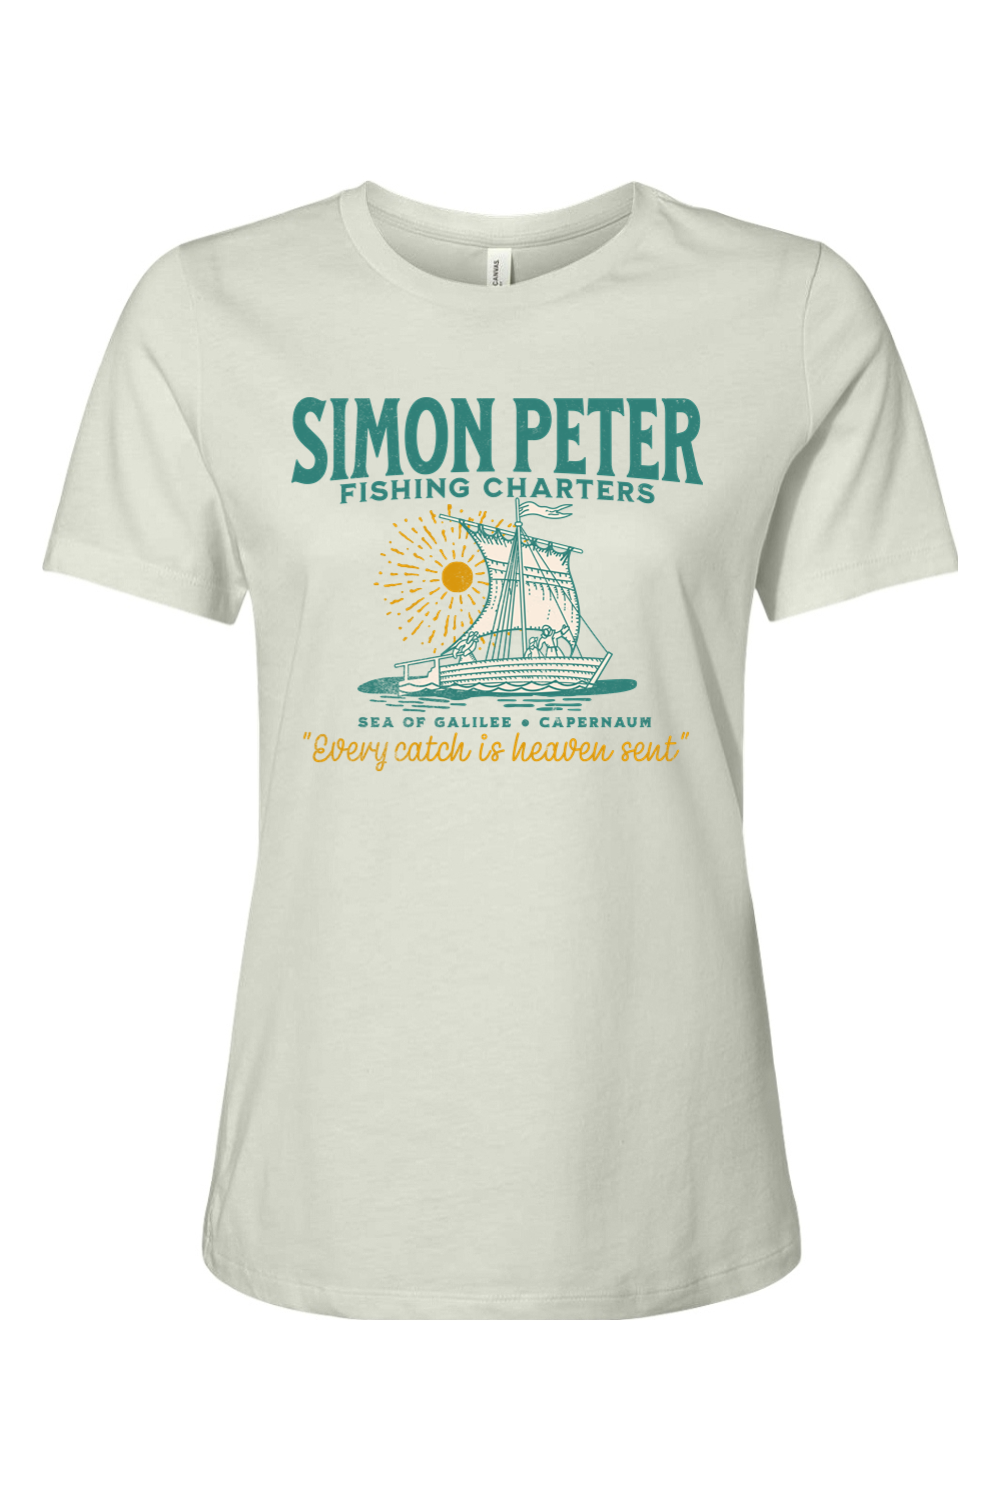 Simon Peter Fishing Charters - Ladies Tee